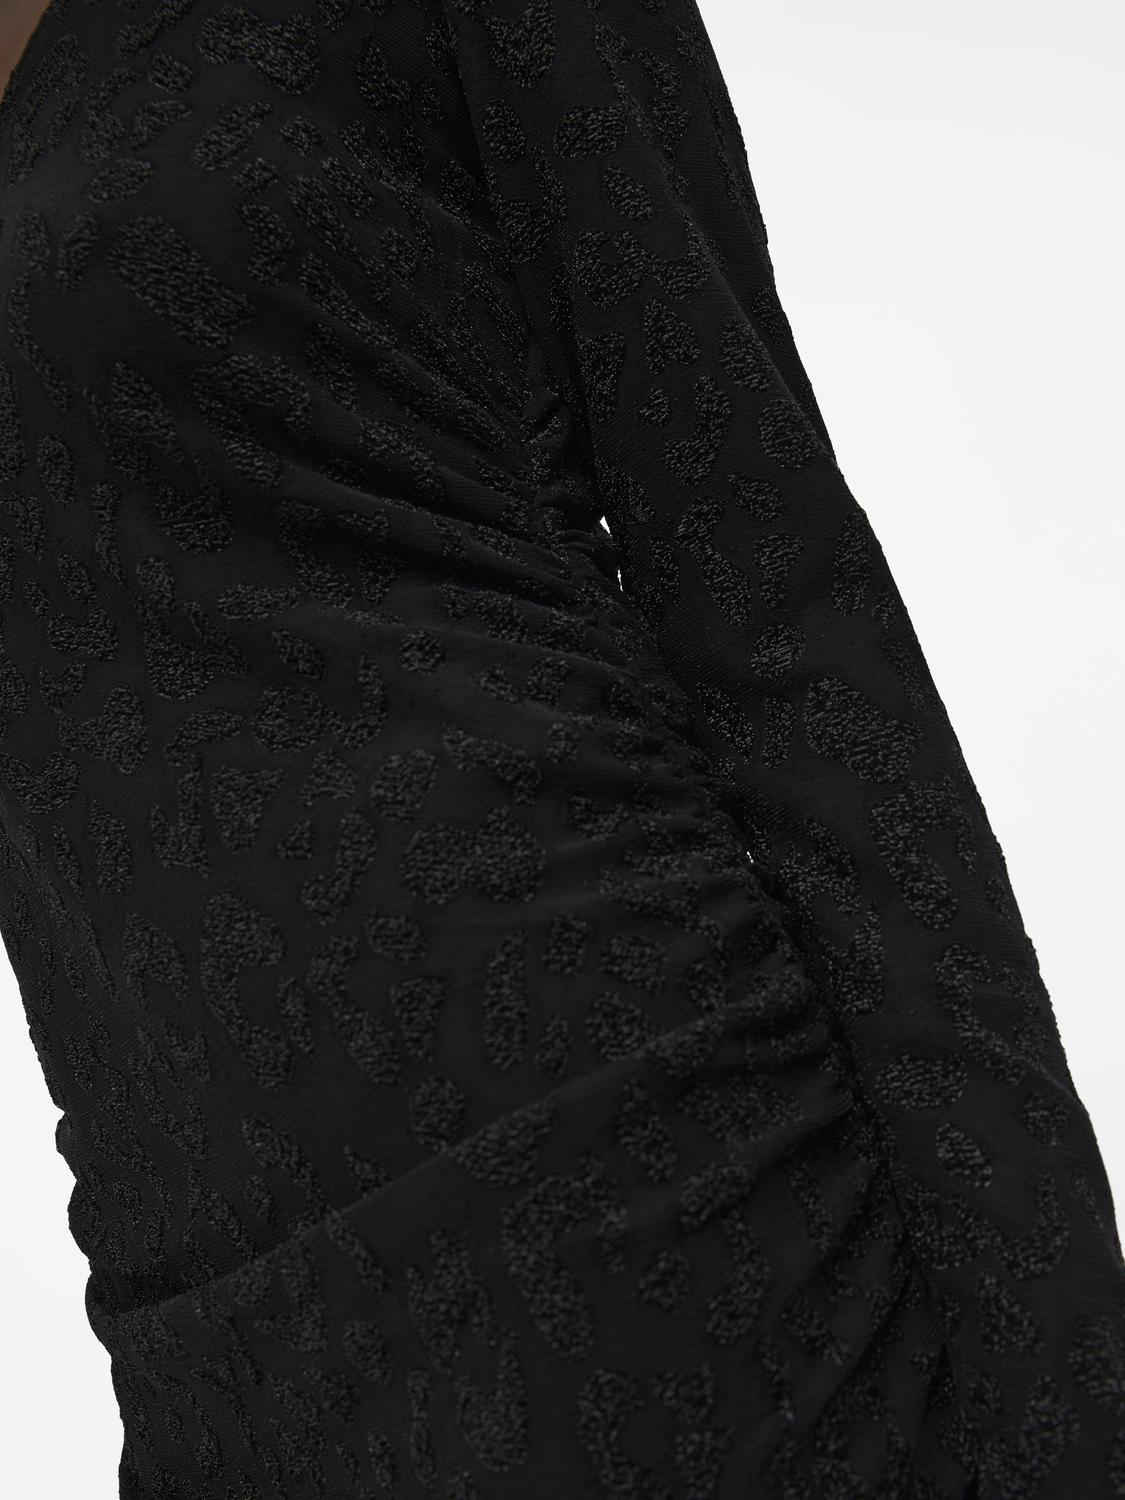 OBJAISLIN Dress - Black